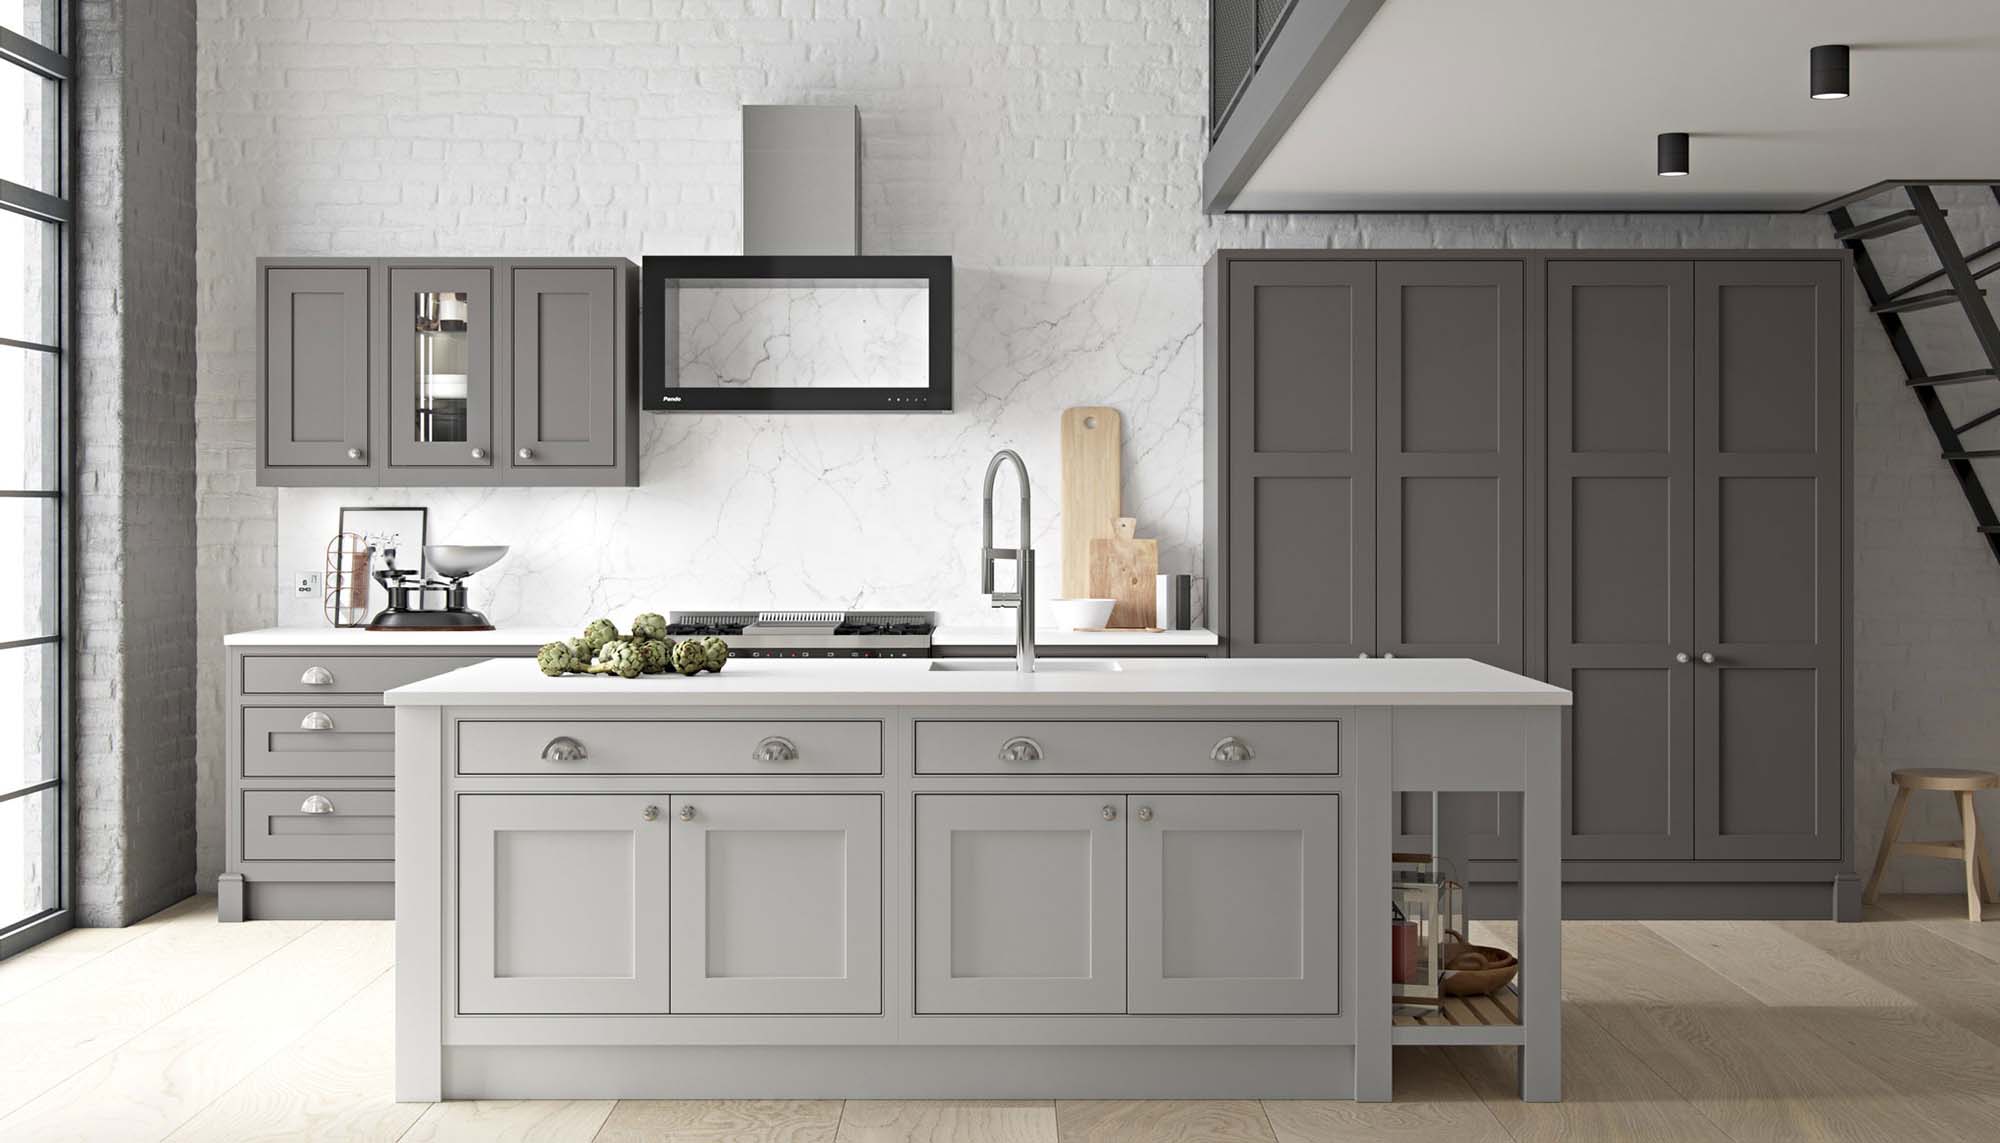 Top Luxury Kitchen Design Ideas 2019 Tips Pics Design Ideas